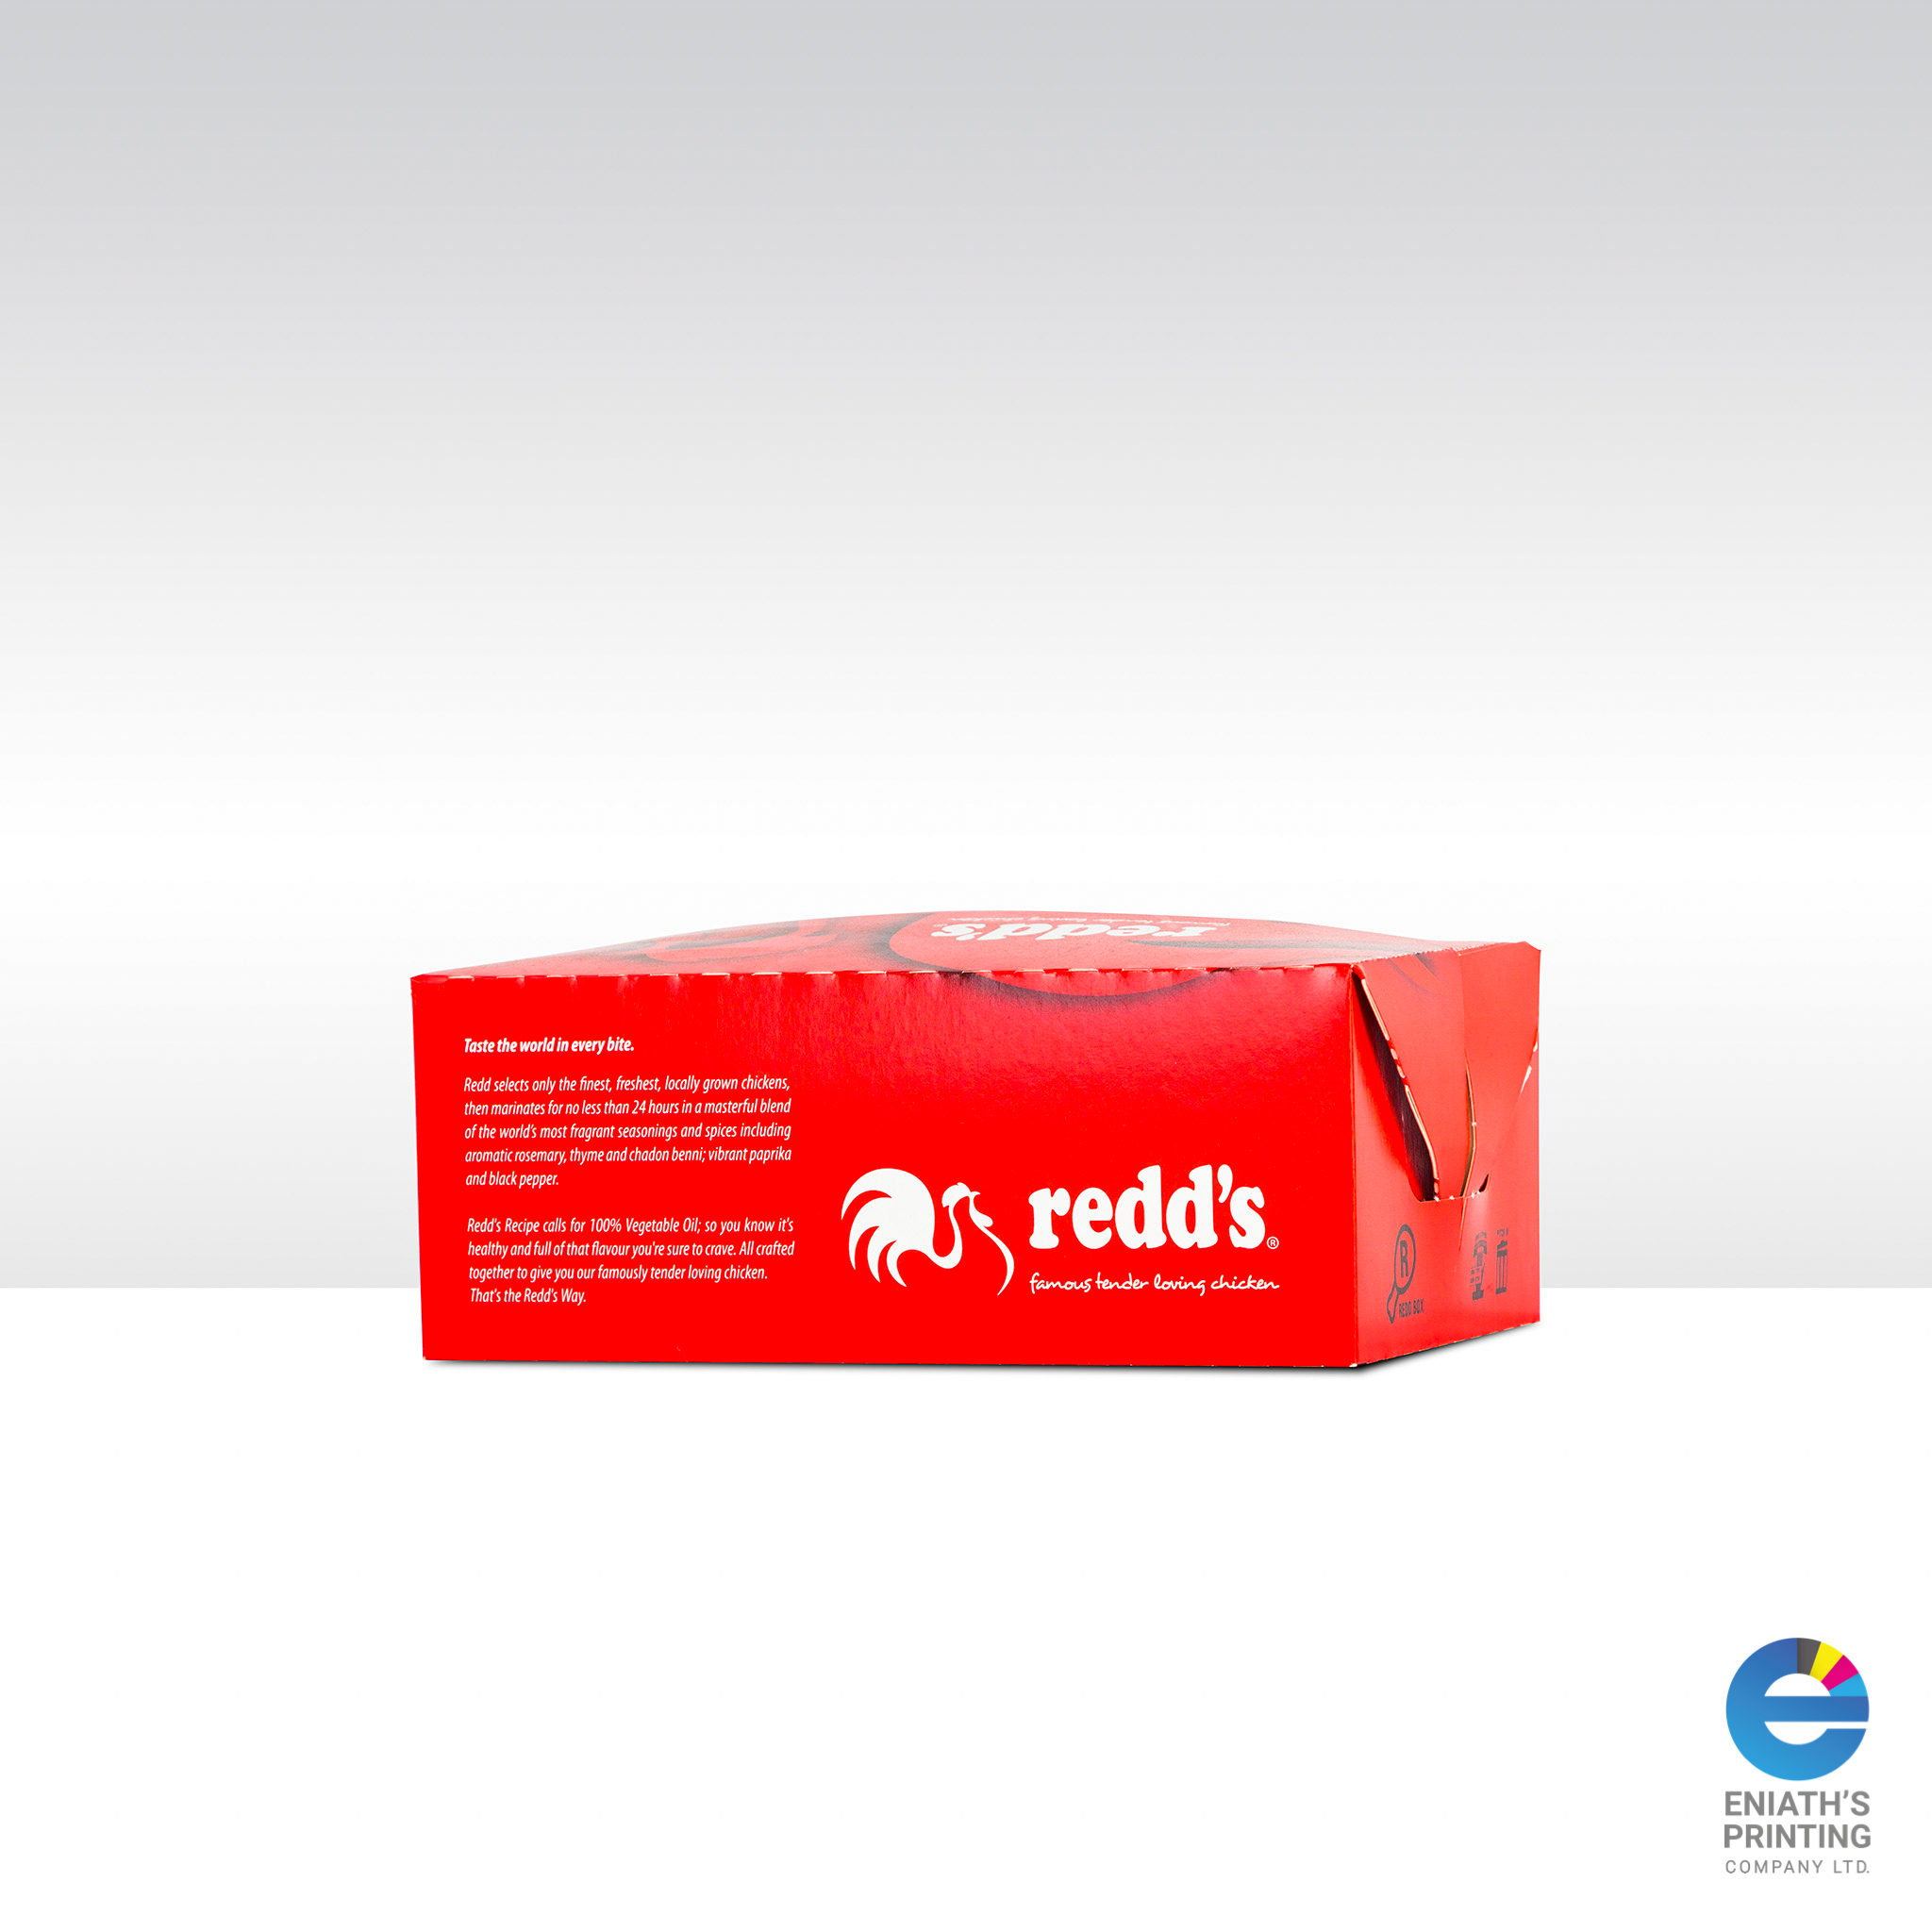 Redd's Packaging - Printed by Eniath's Printing Co. Ltd.